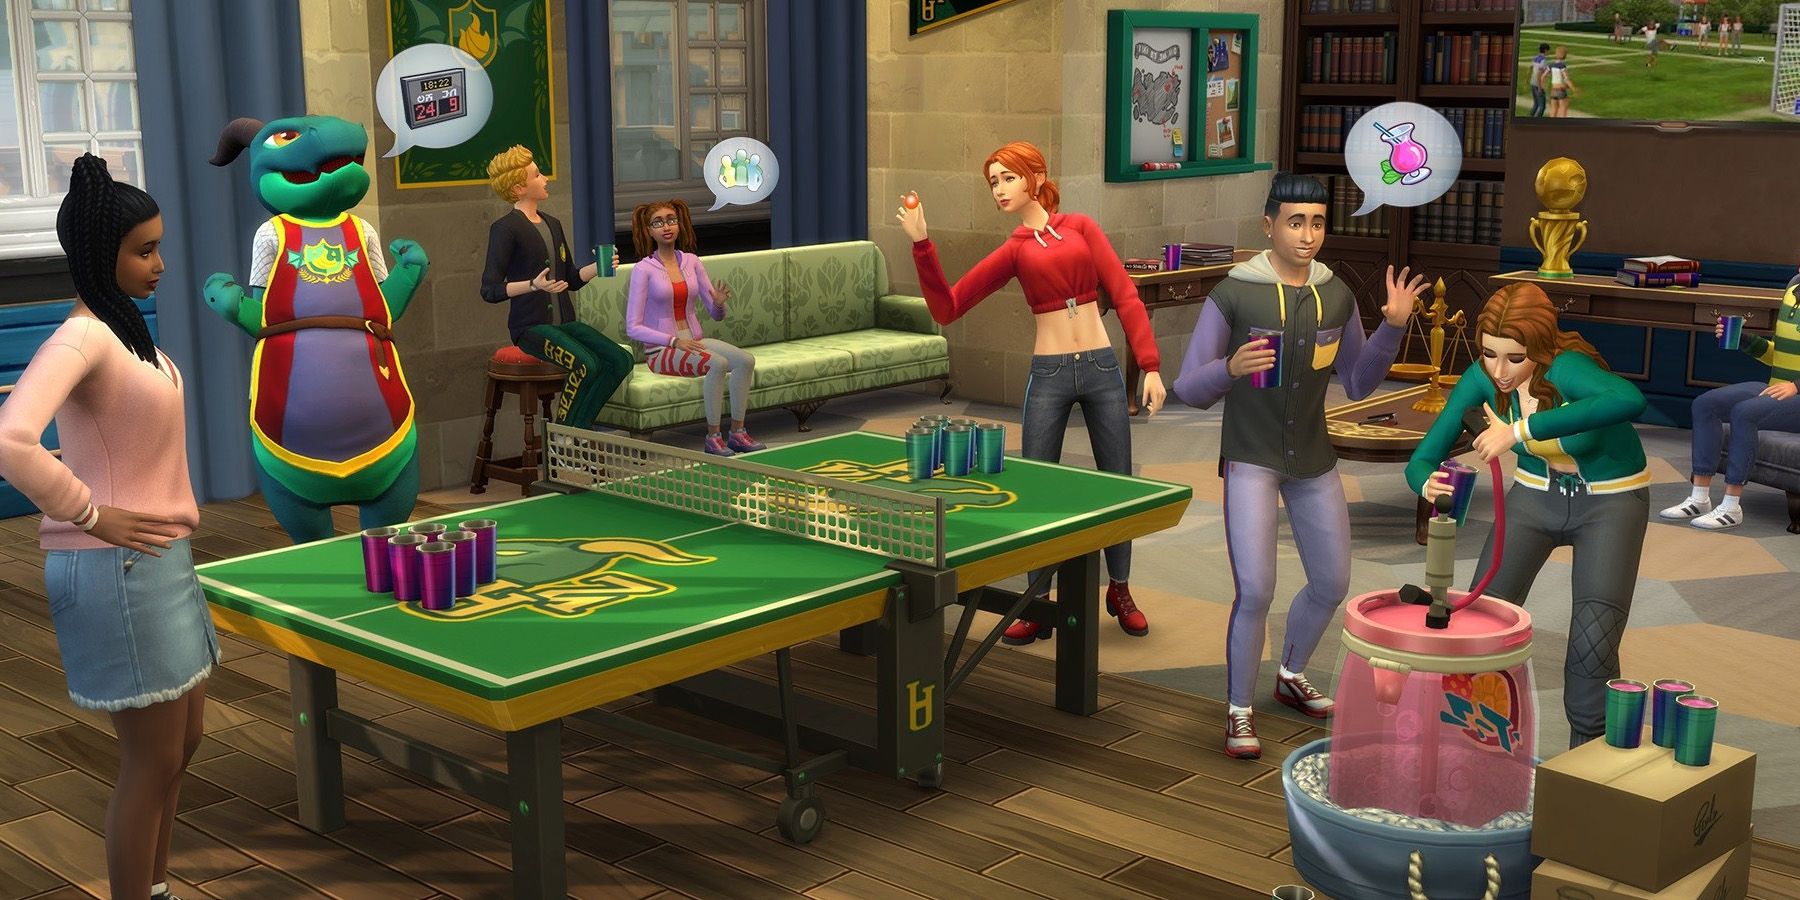 The Sims 4 University